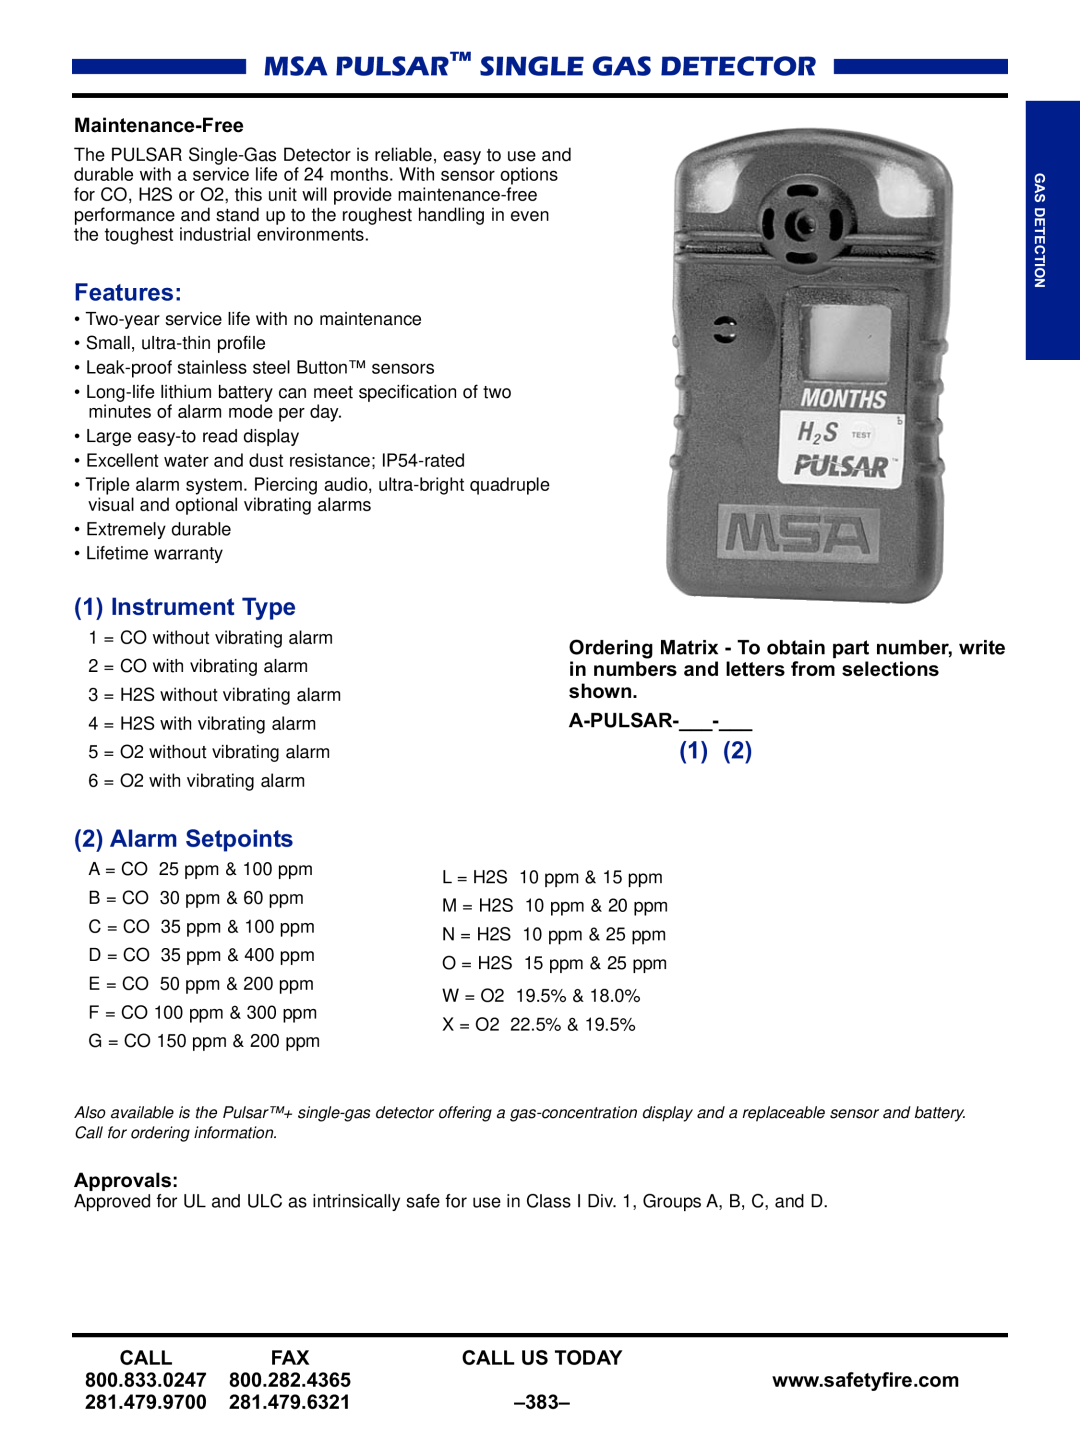 Black & Decker MULTI-GAS DETECTORS manual Msa Pulsar Single Gas Detector, Instrument Type, Alarm Setpoints, Features 